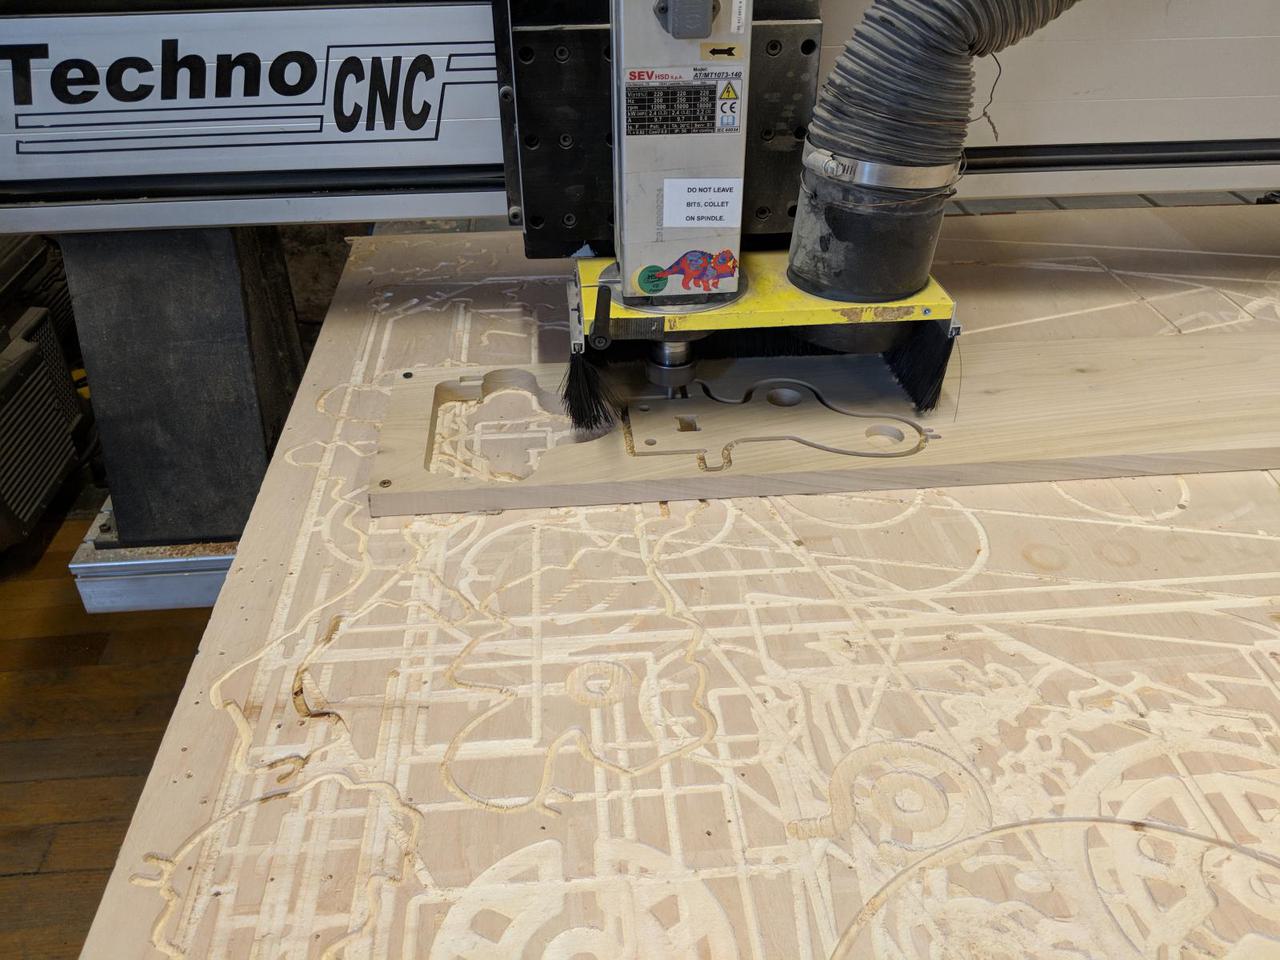 CNC bit cutting into piece of wood